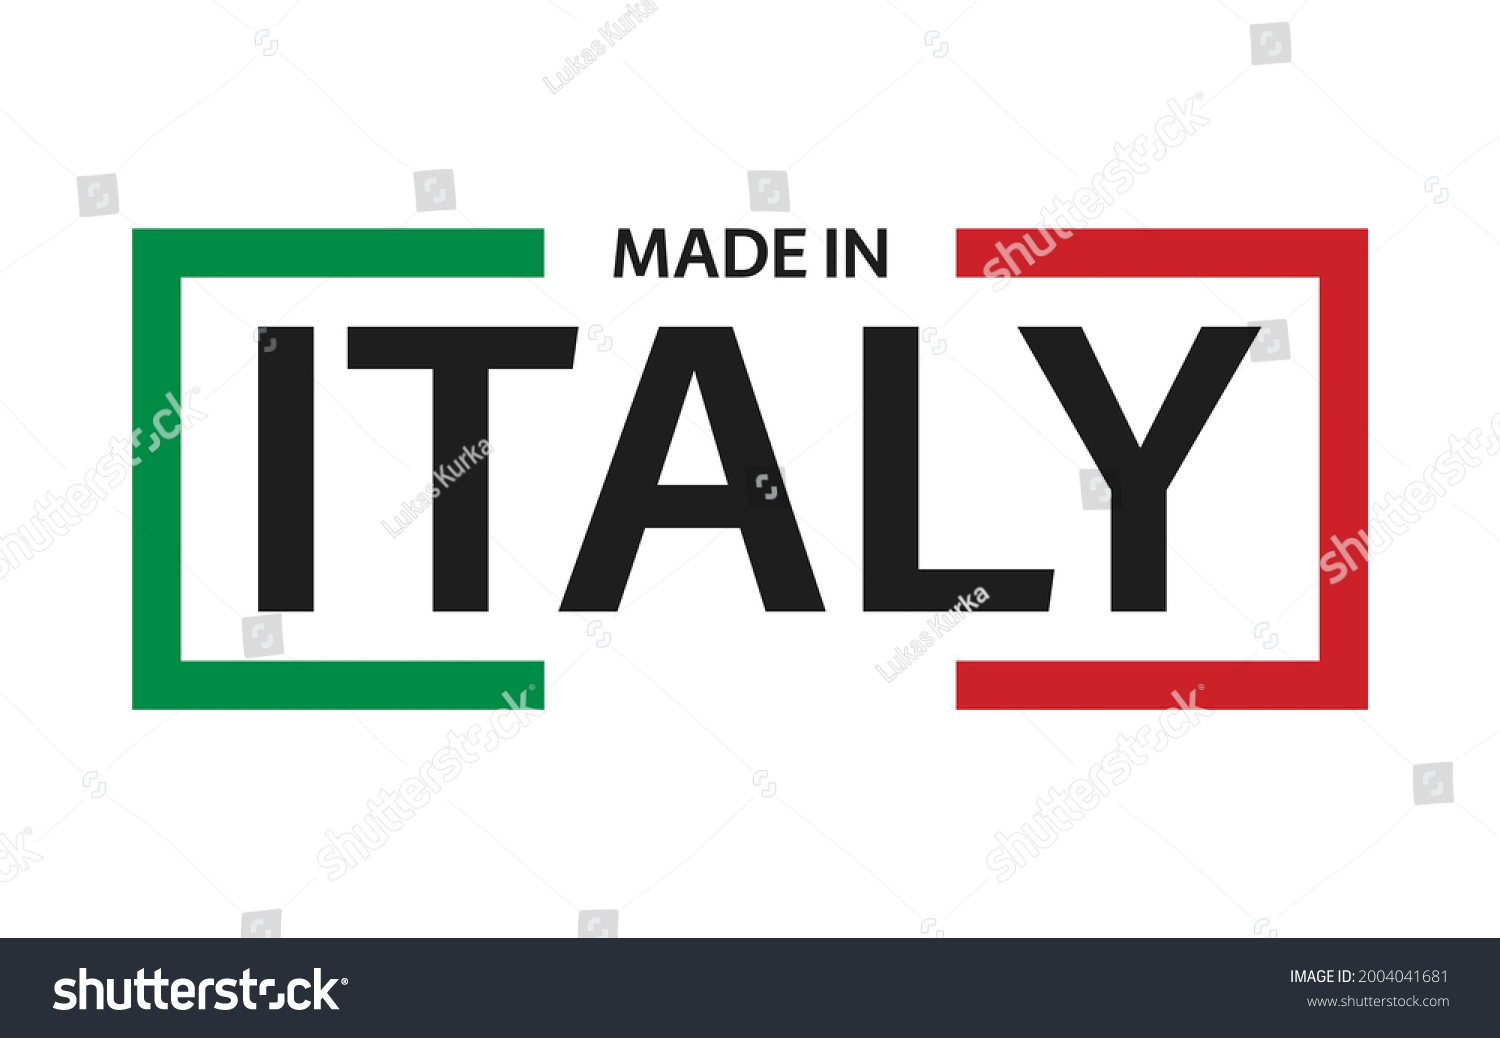 6,142 Italia logo Images, Stock Photos & Vectors | Shutterstock